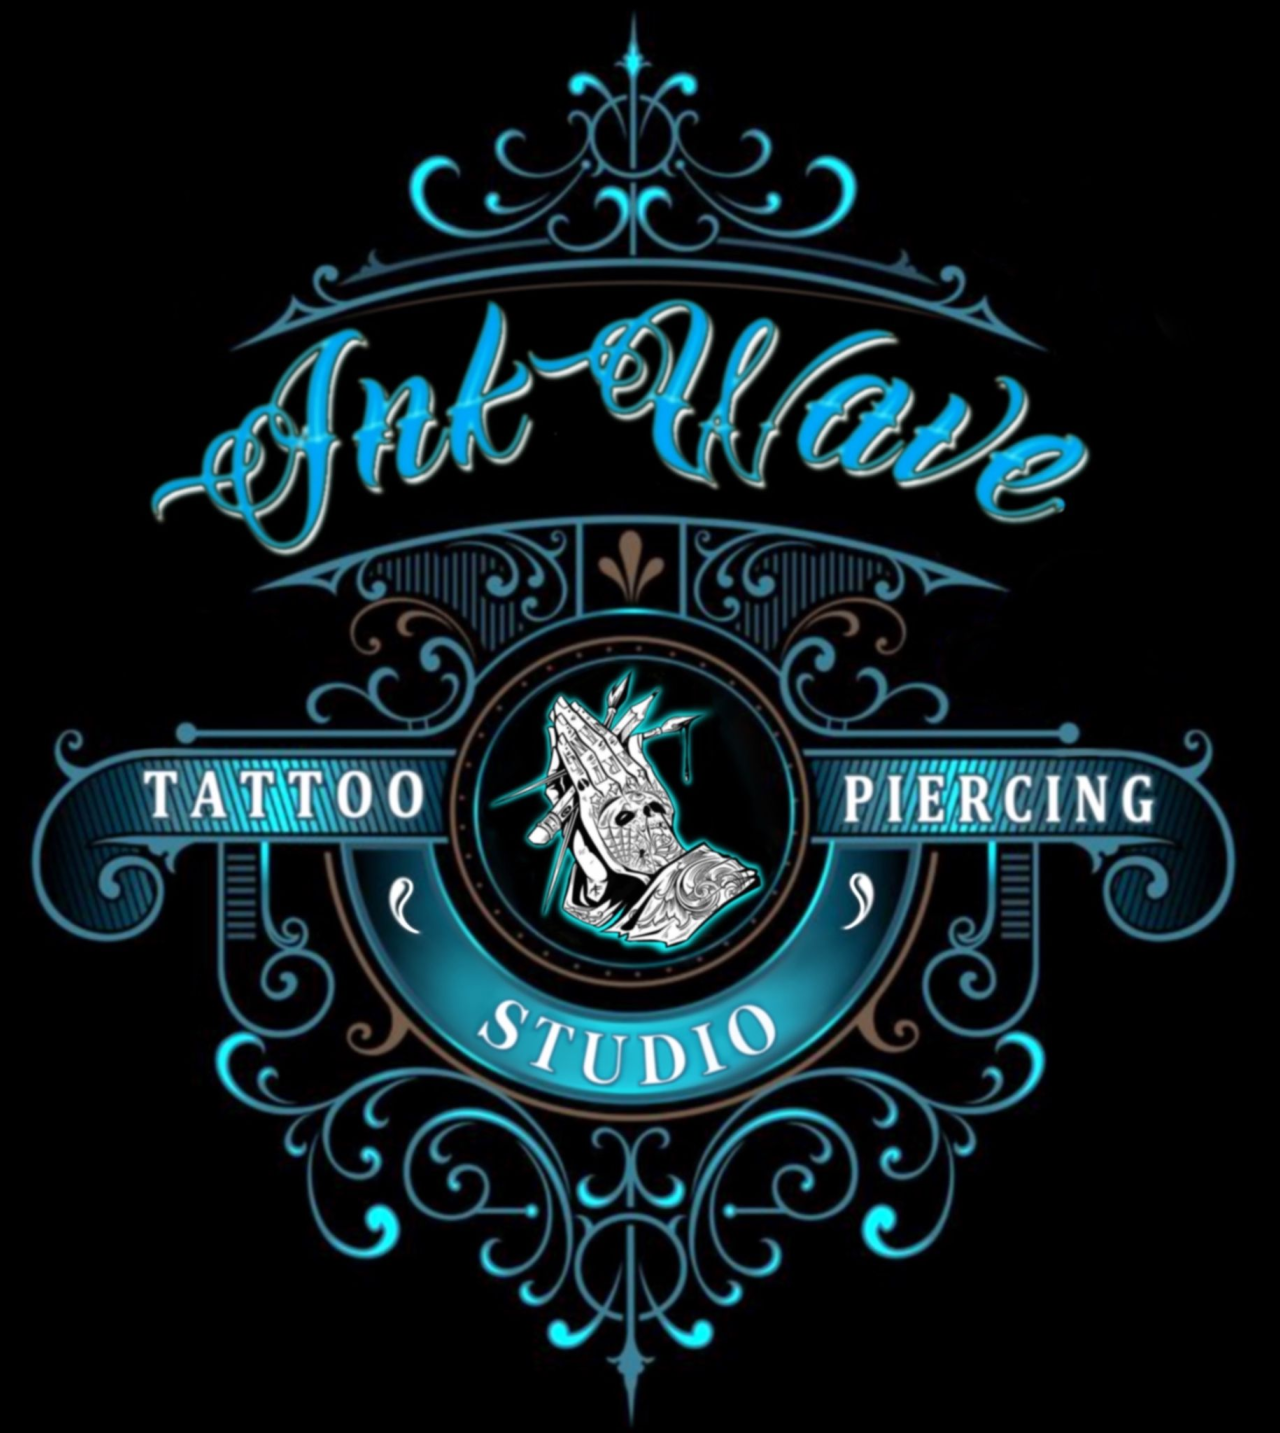 Tattoo Studio's logo